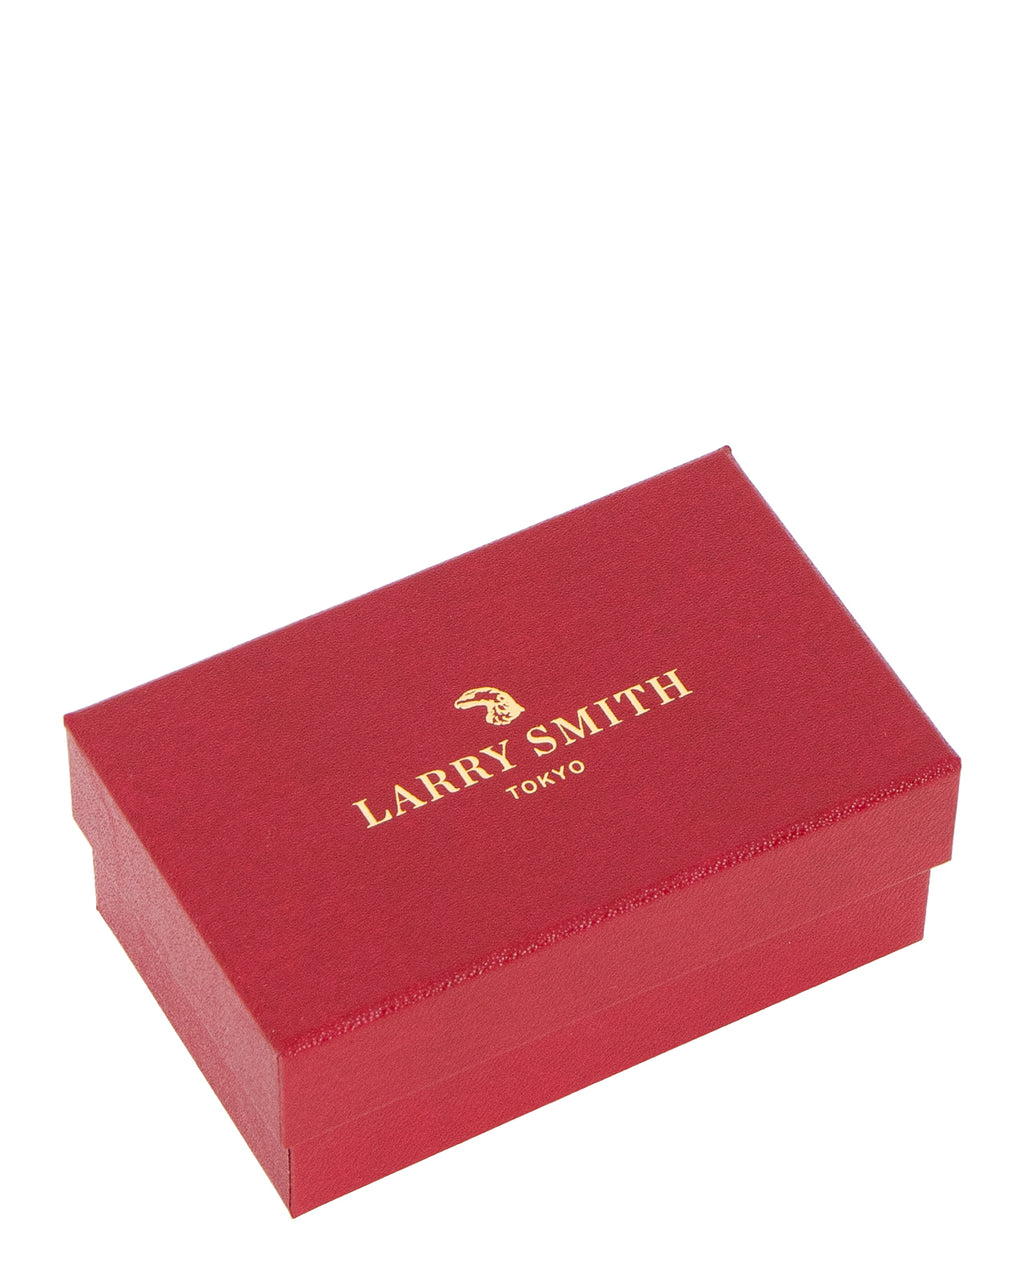 Larry Smith Mens Bamboo Bracelet (Skinny)